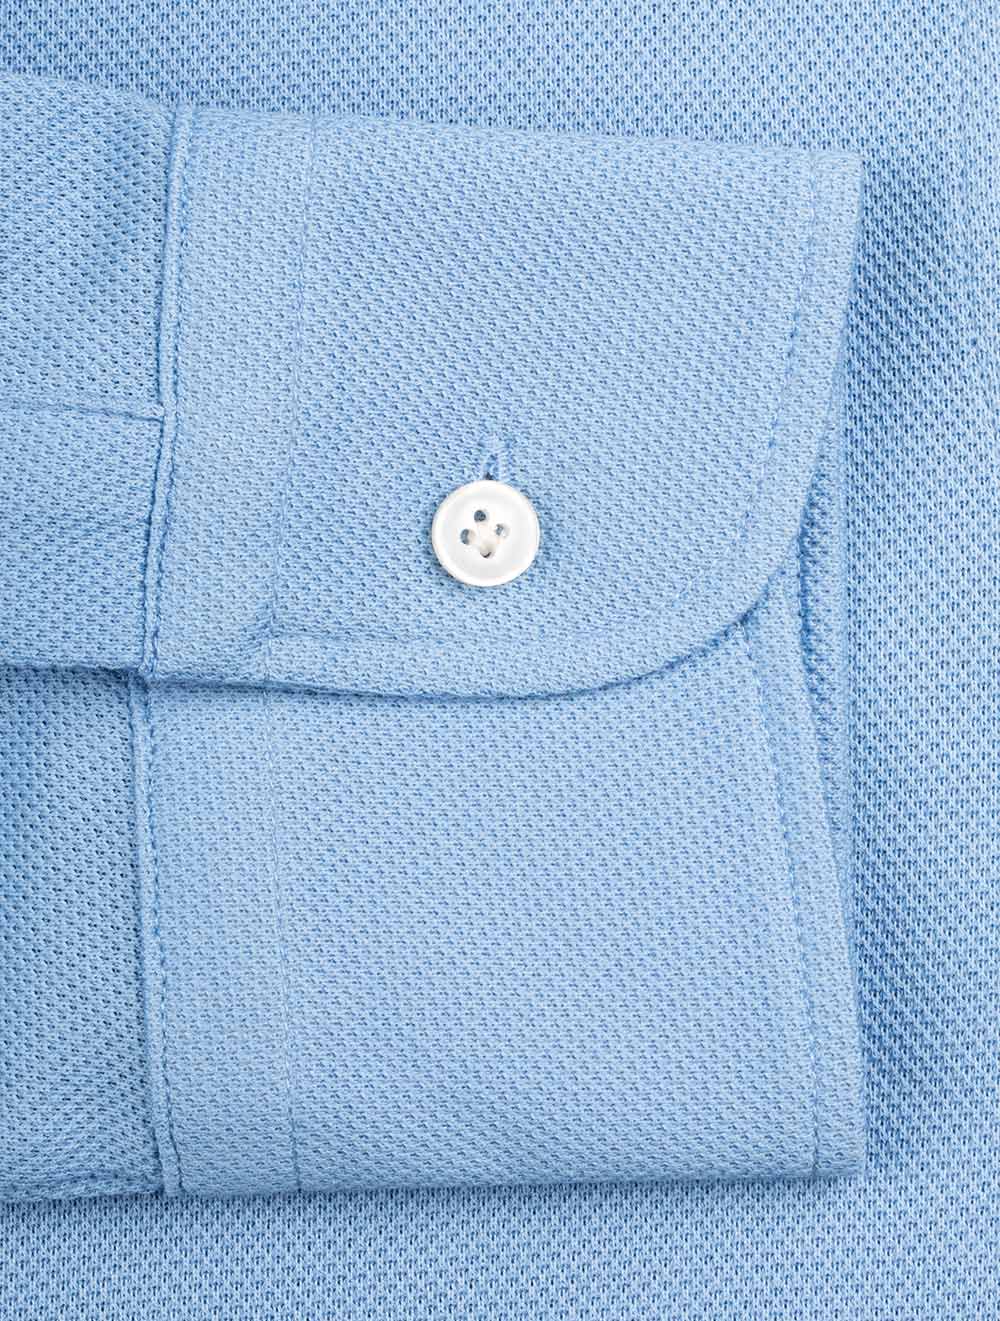 LOUIS COPELAND Long Sleeve Polo Shirt Blue